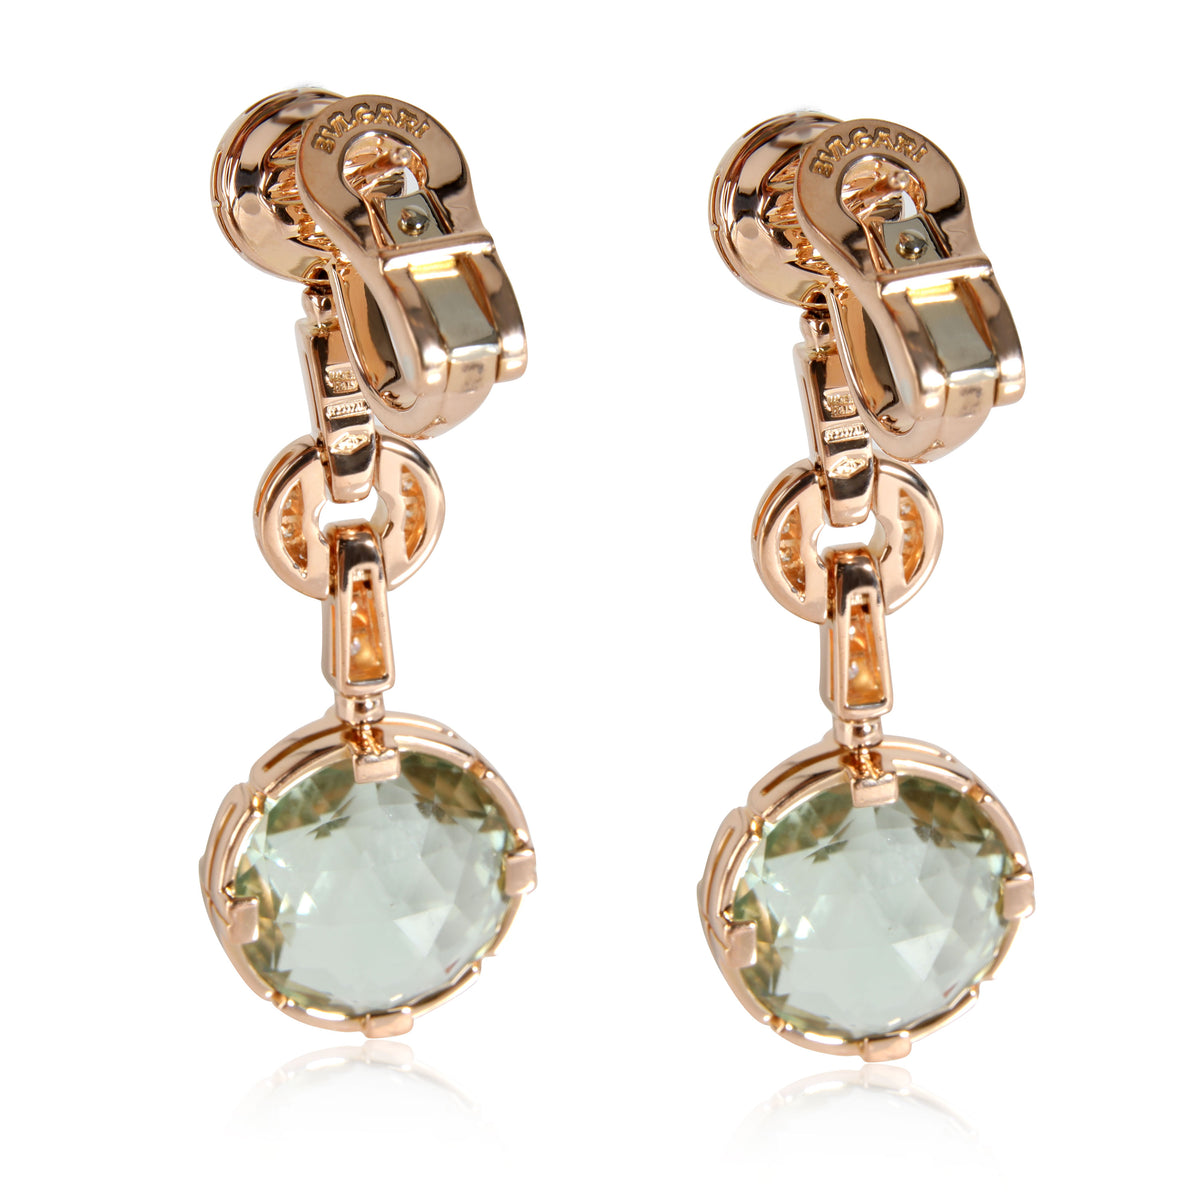 Bvlgari Parentesi Diamond, Amethyst & Quartz Earrings in 18K Rose Gold 0.35 CTW